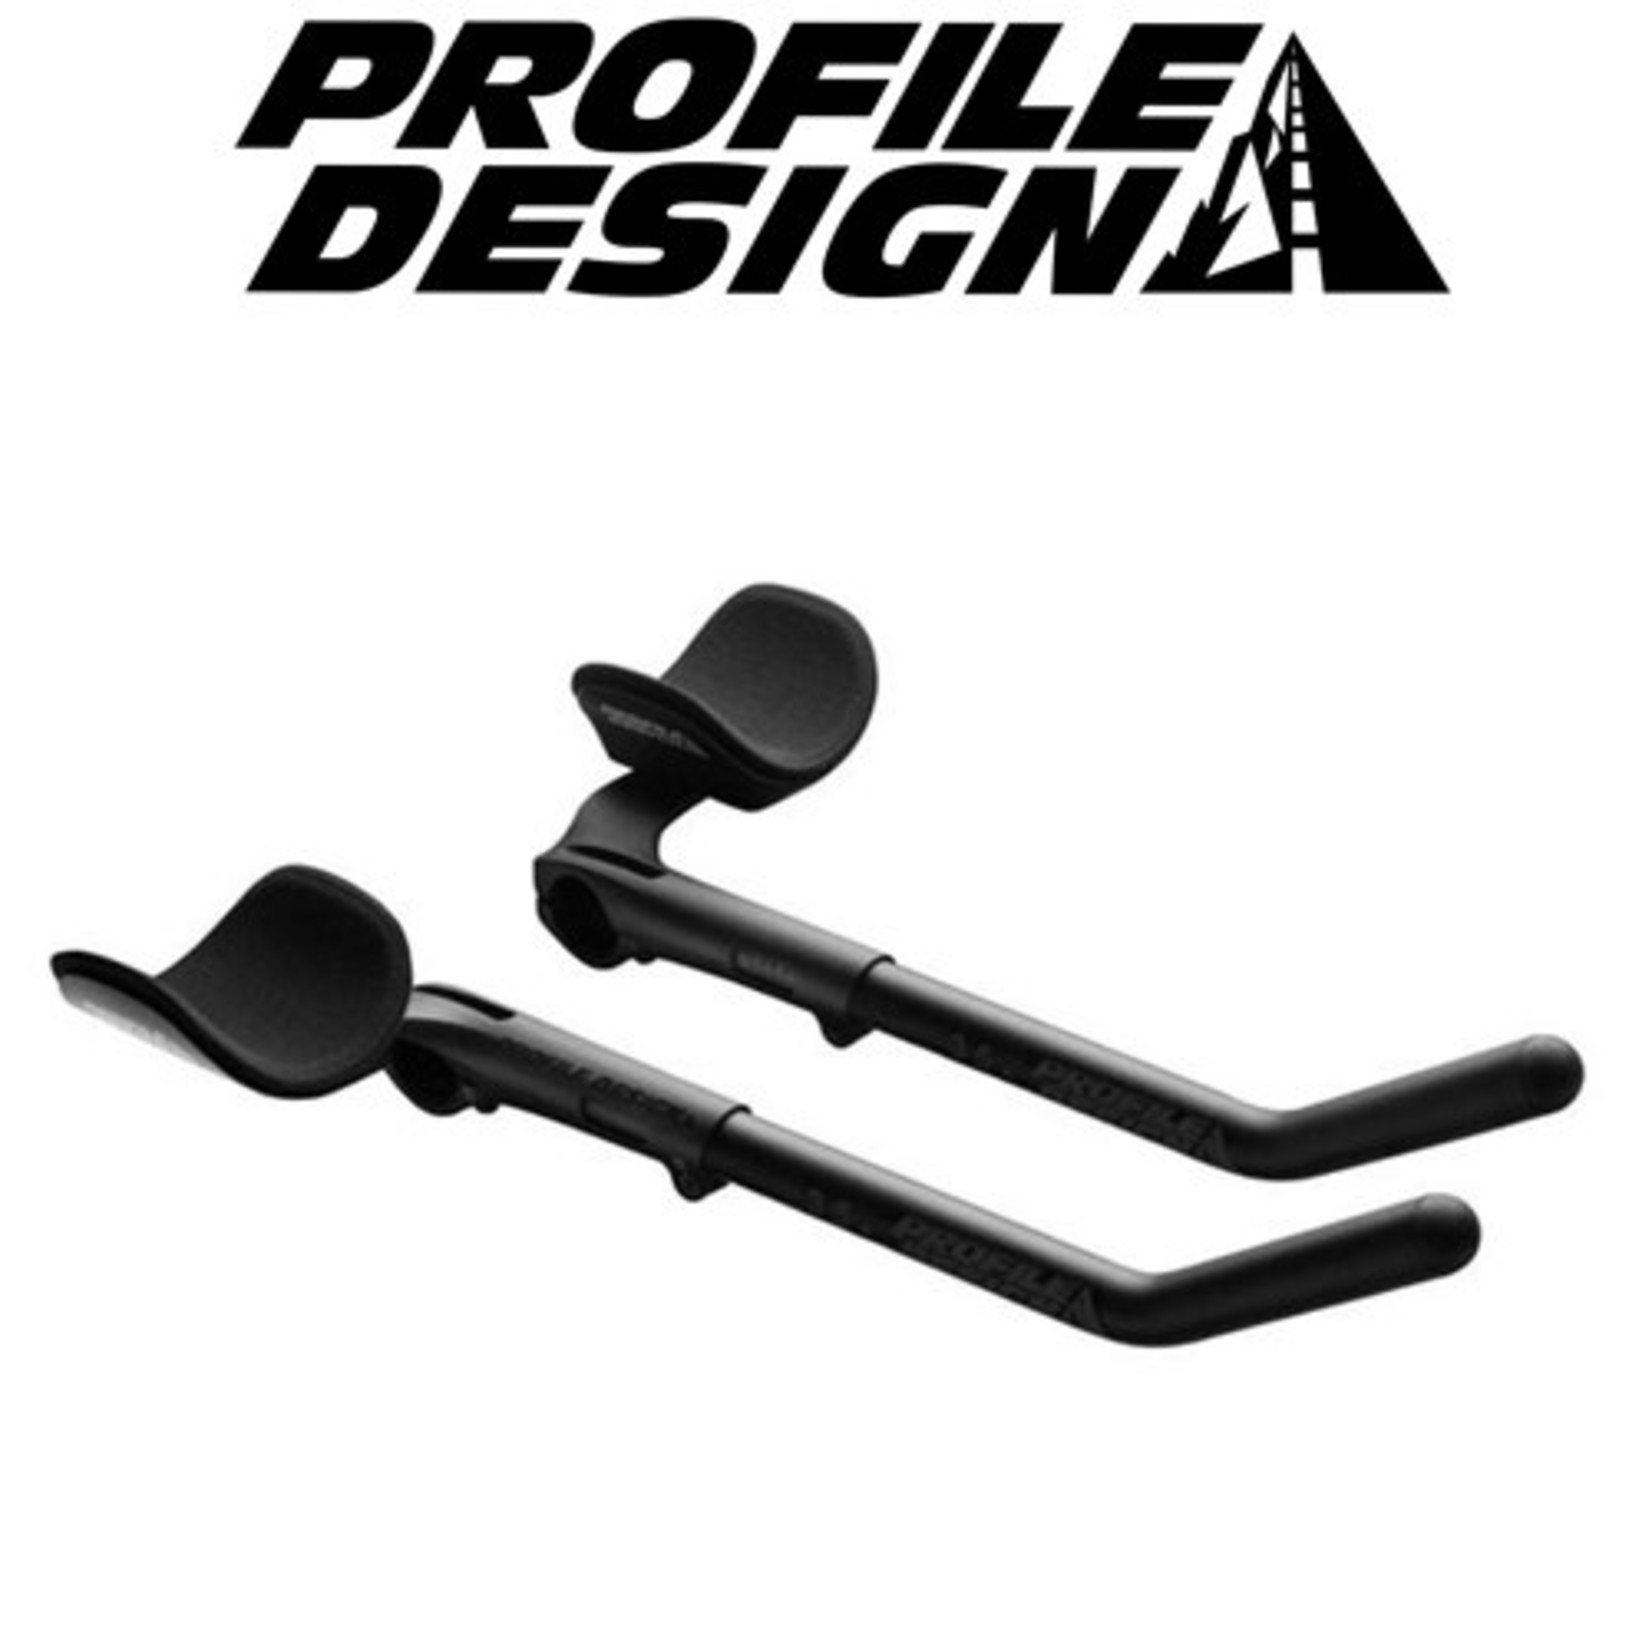 Profile Profile Design Aerobar - Sunsonic Race 35A- Width 142mm to 272mm Length 350mm